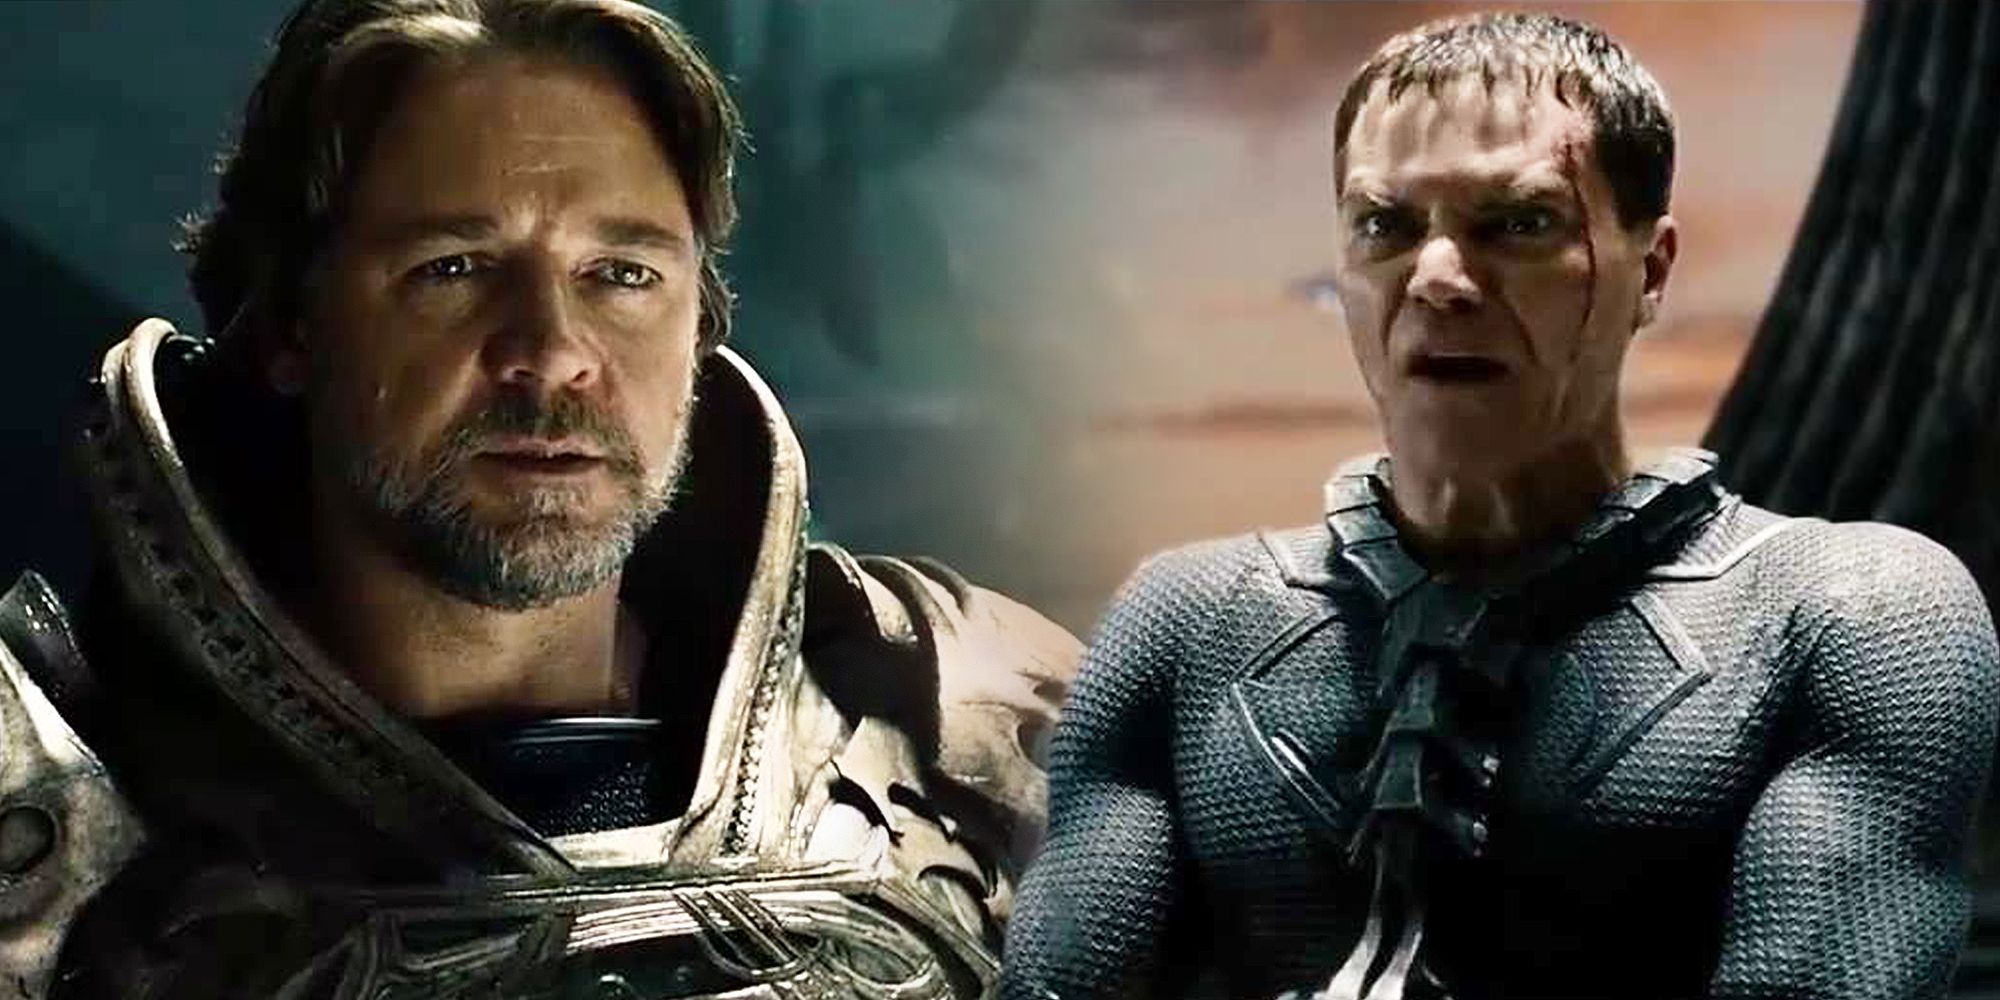 Russell Crowe as Jor-El and Michael Shannon as Zod in Man of Steel